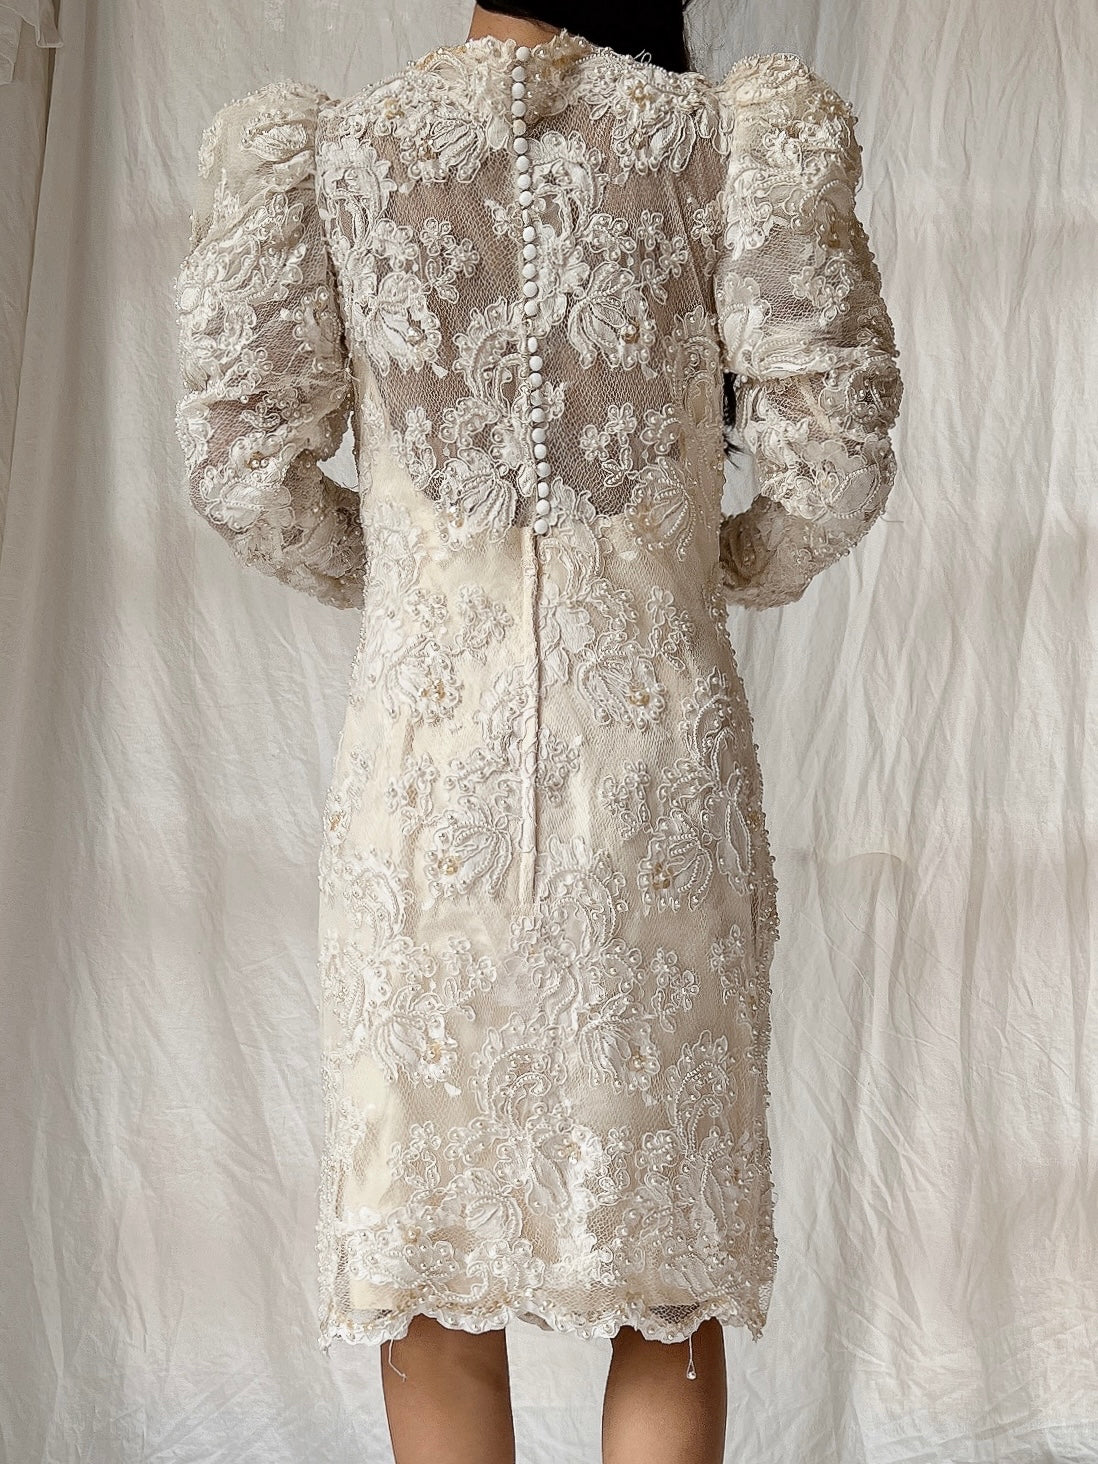 Vintage Alencon Lace and Silk Dress - M